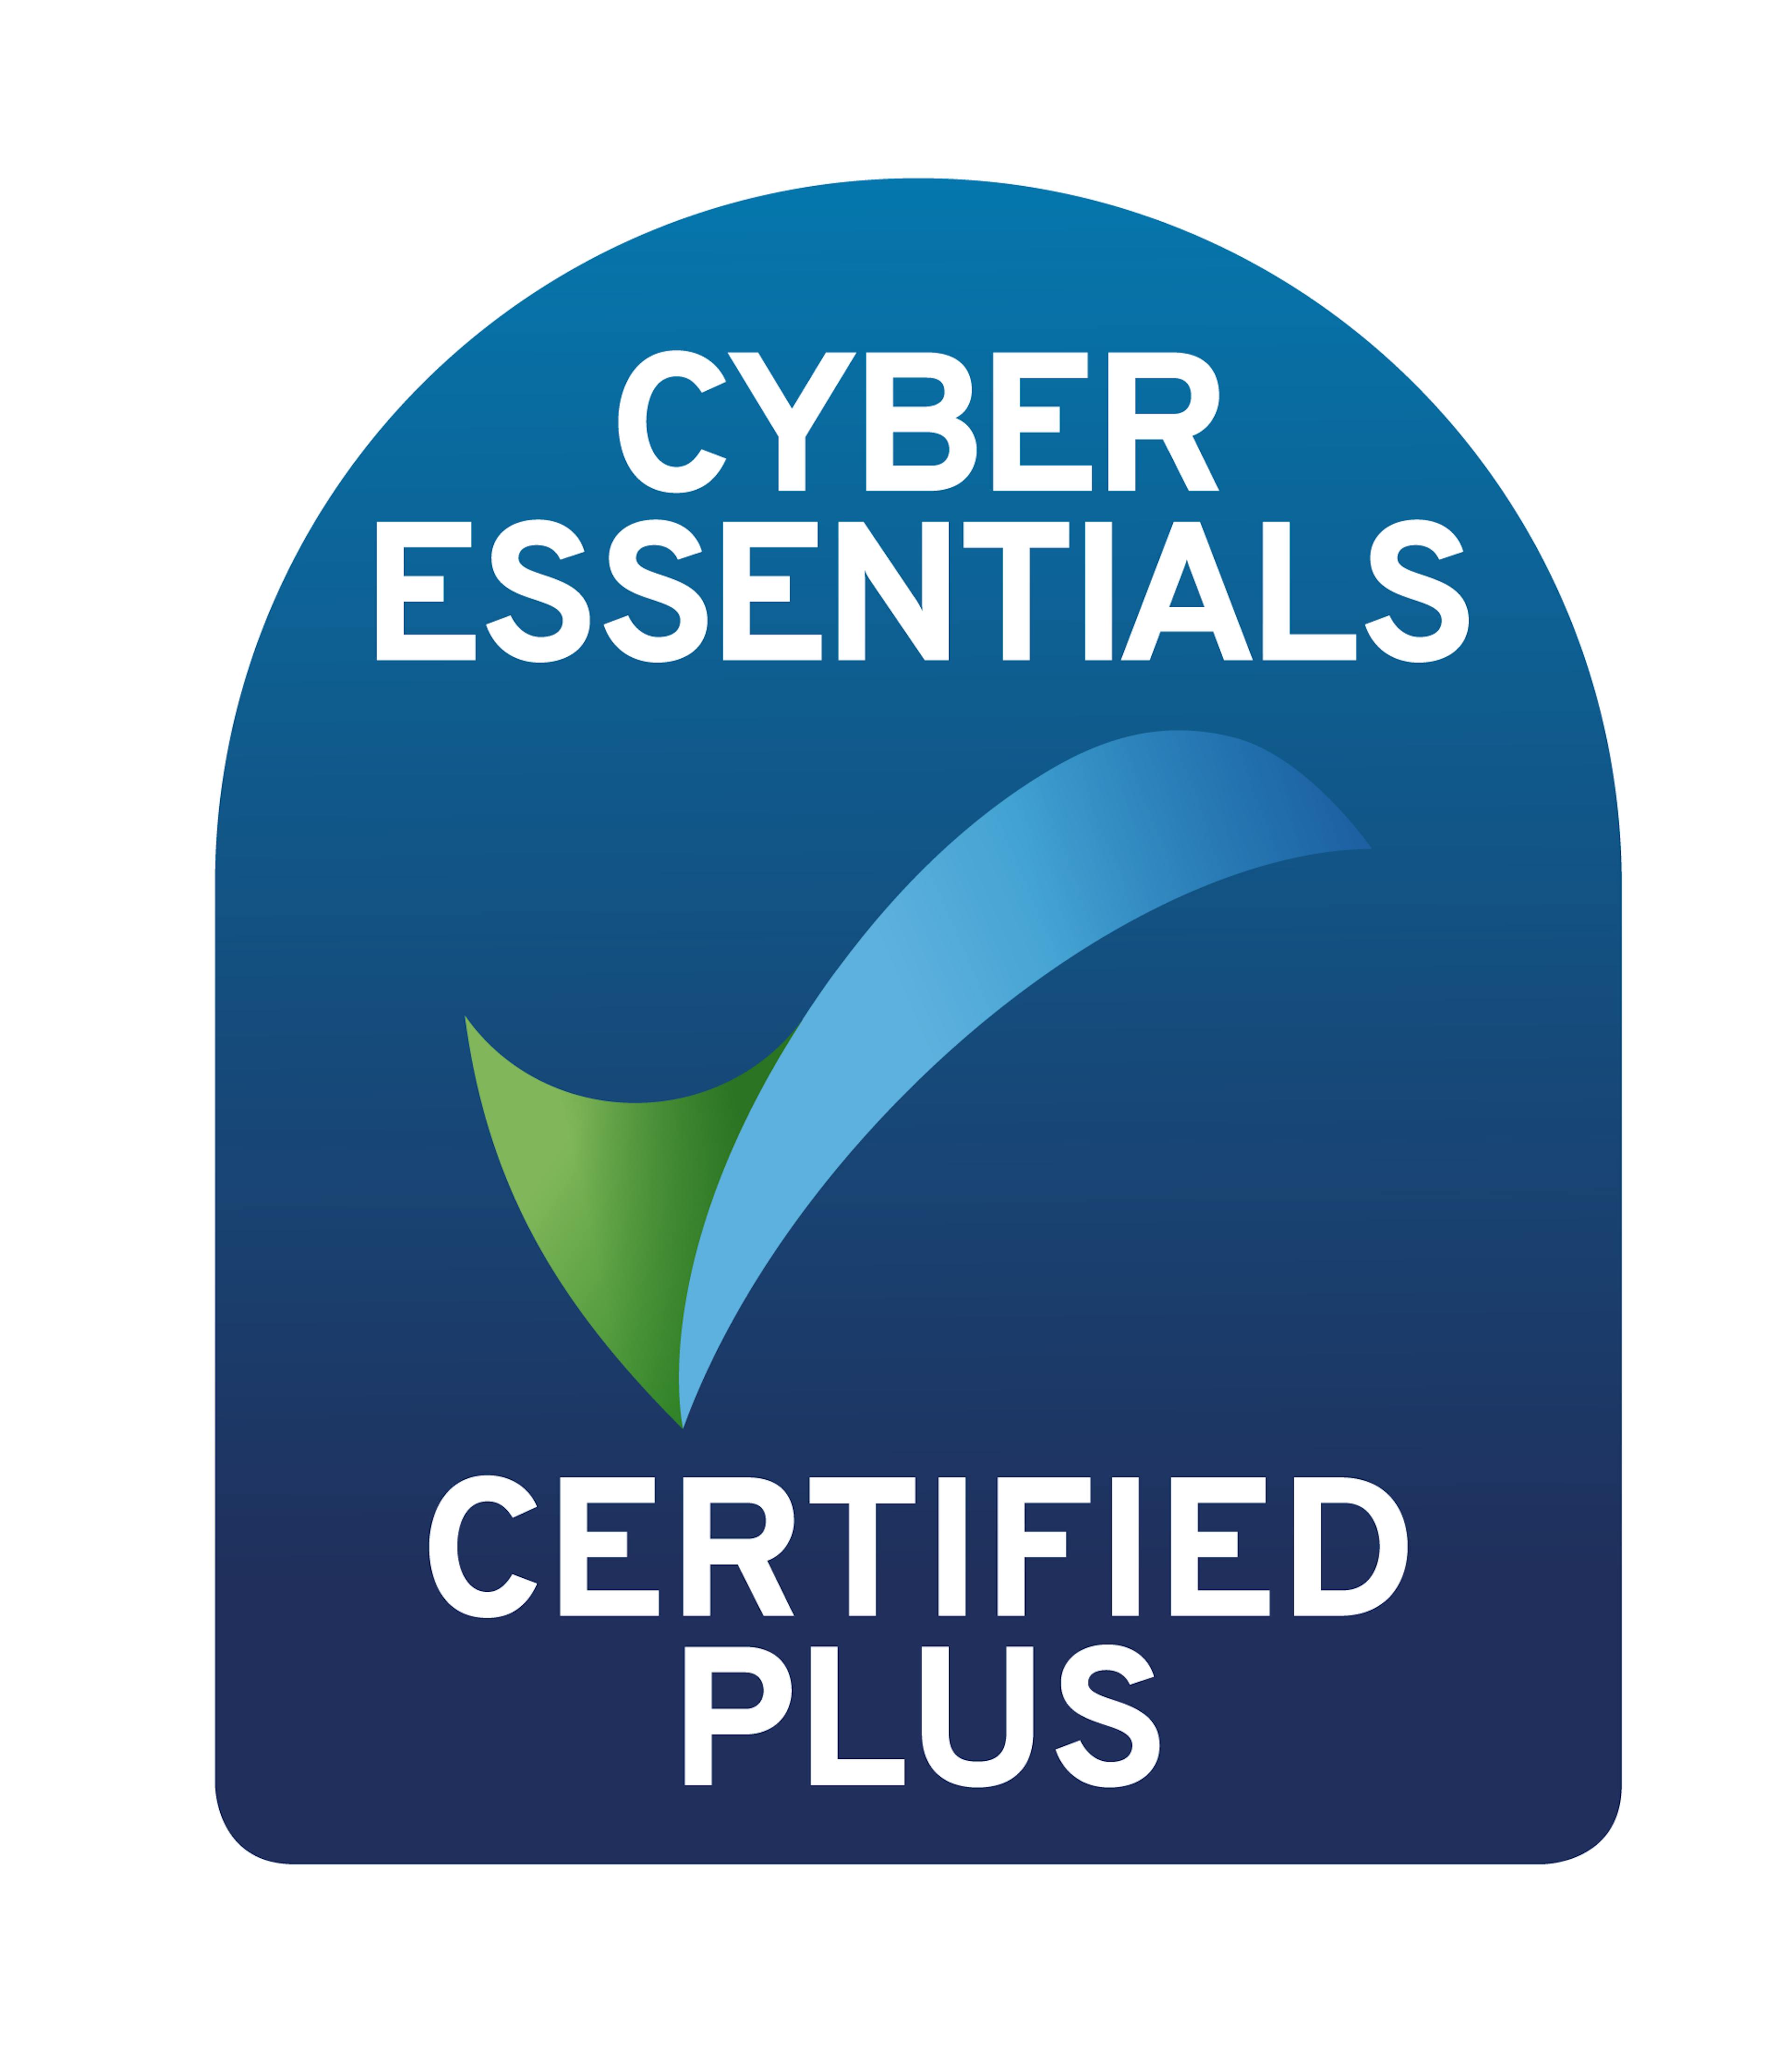 Cyber essentials - Certified Plus